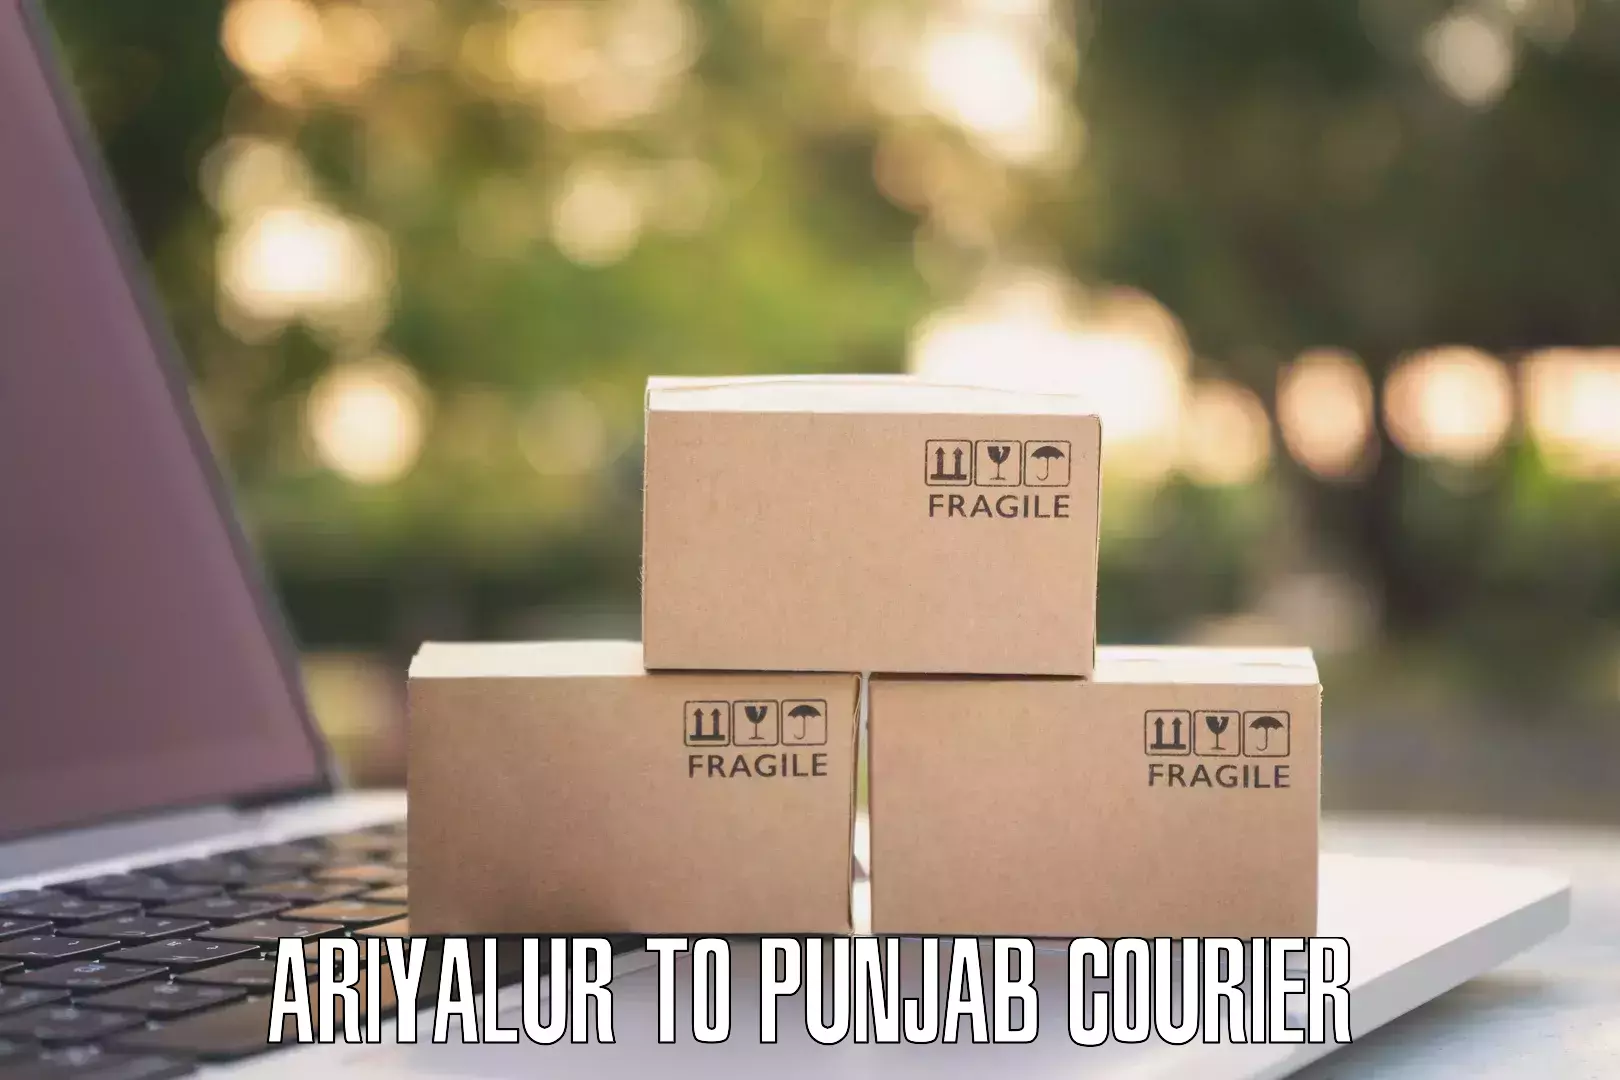 Courier service partnerships Ariyalur to Jalandhar